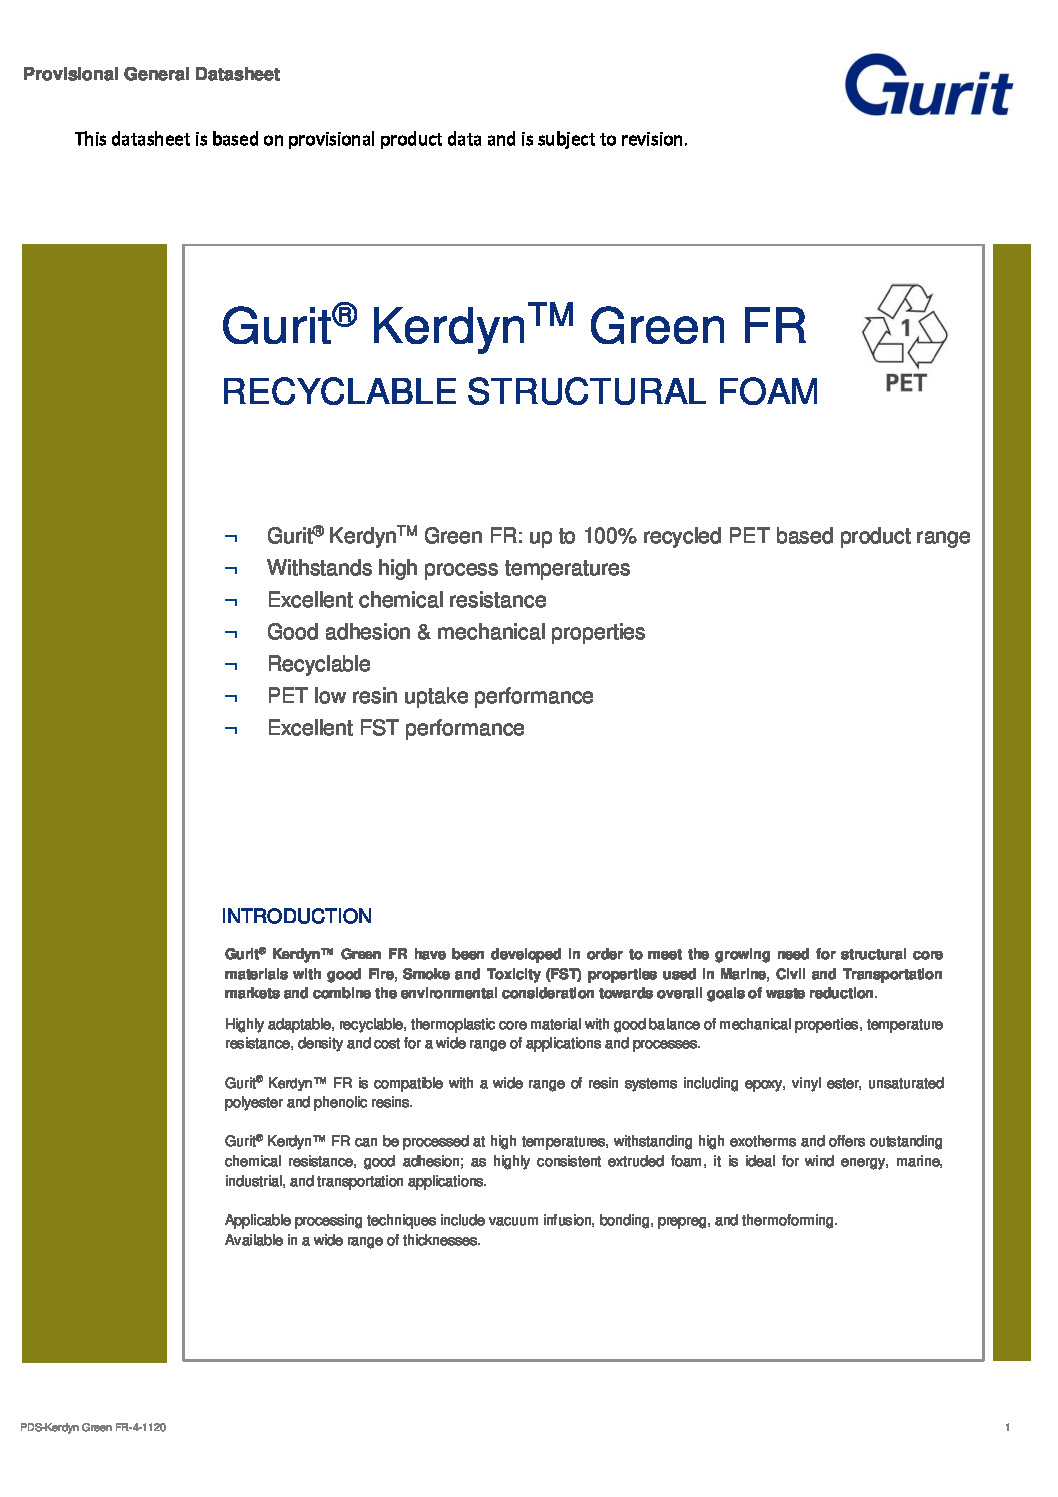 Gurit Kerdyn Green FR Datasheet